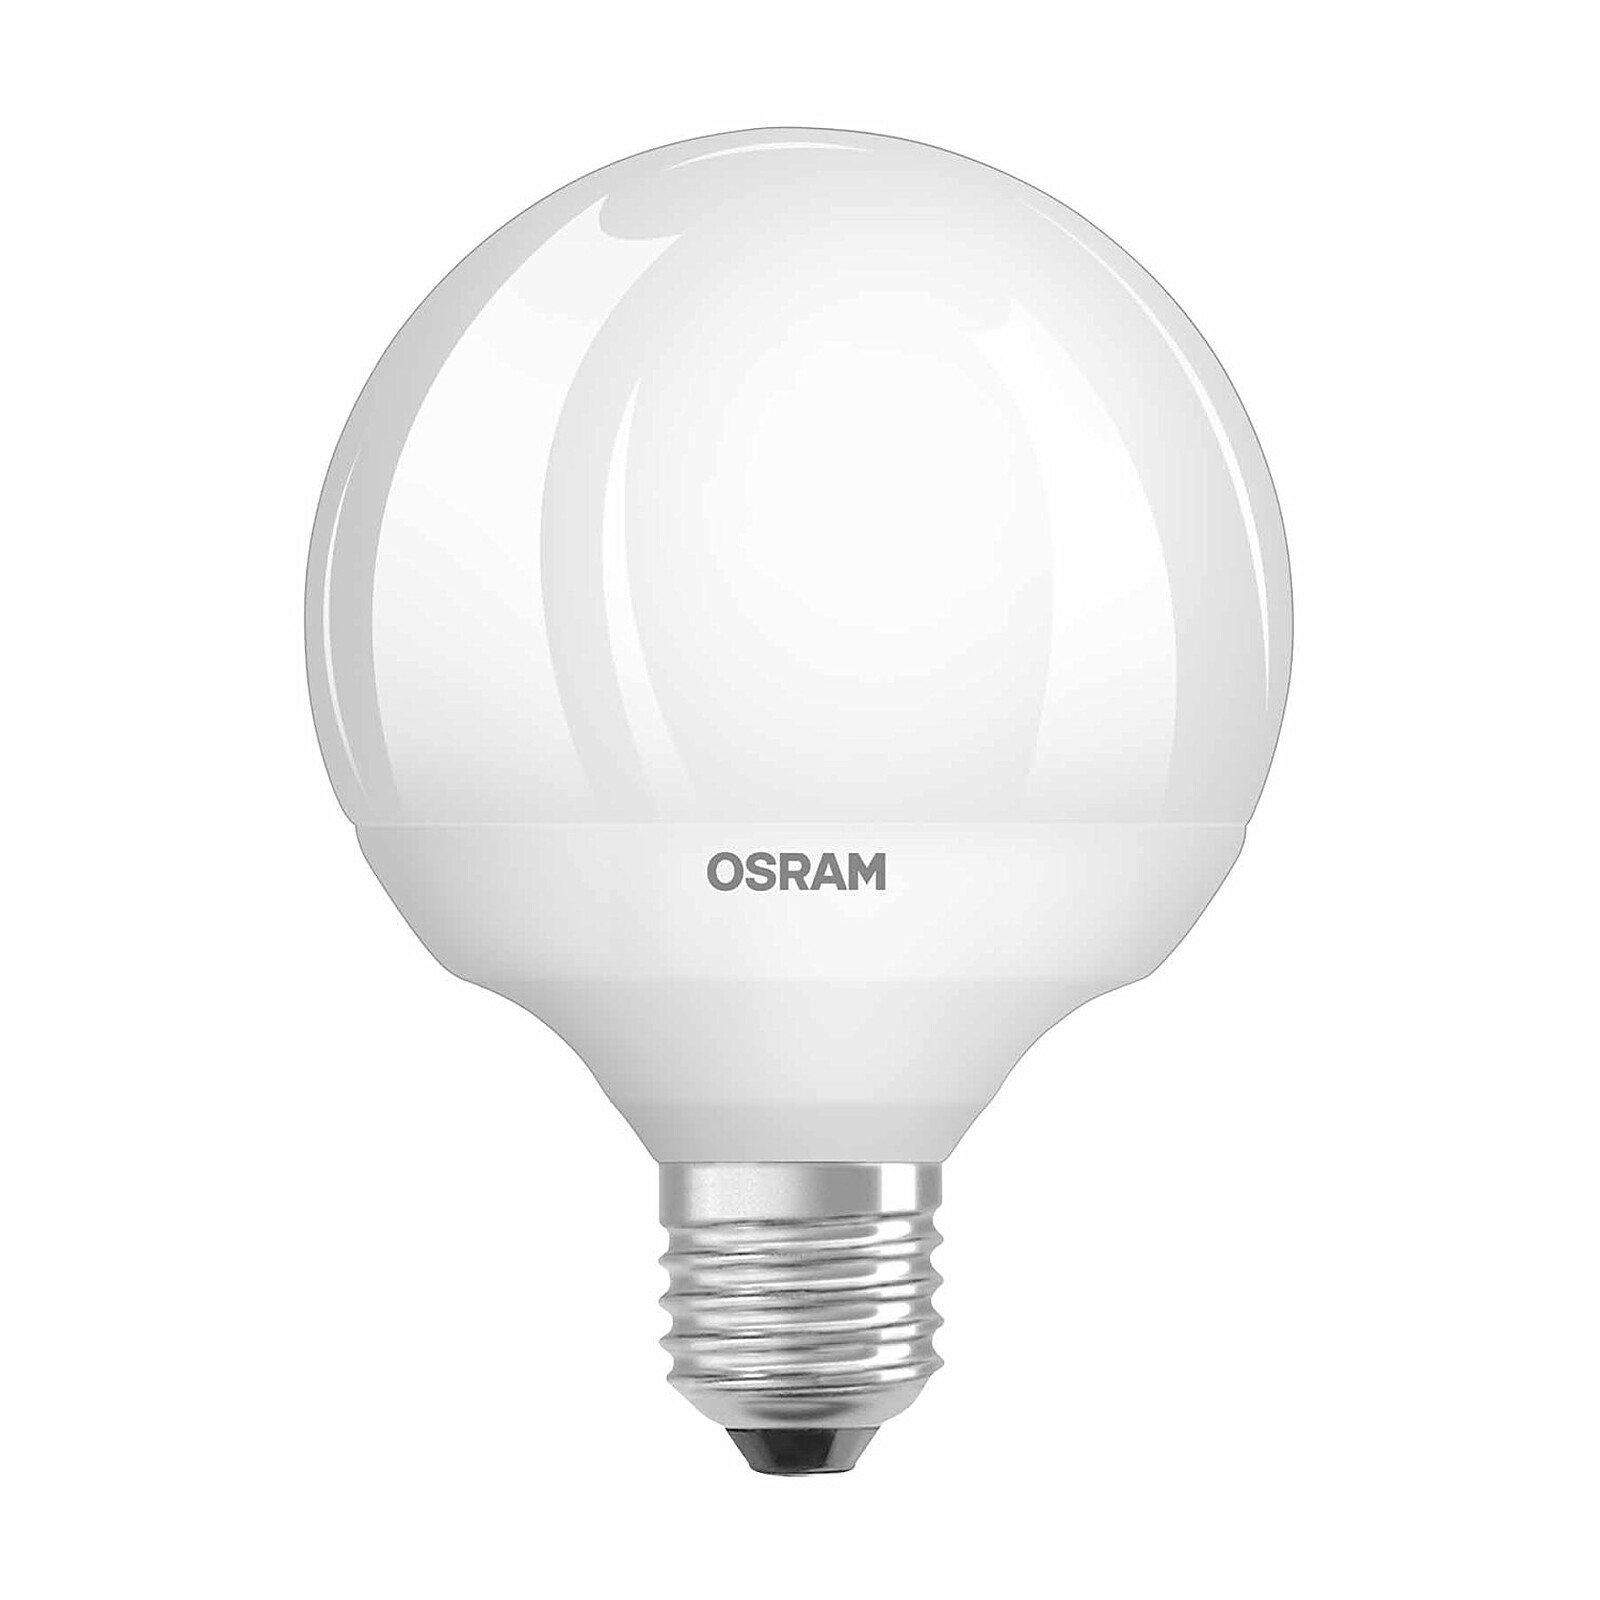 OSRAM lampe LED, Culot: B22d, Blanc chaud, 2700 K